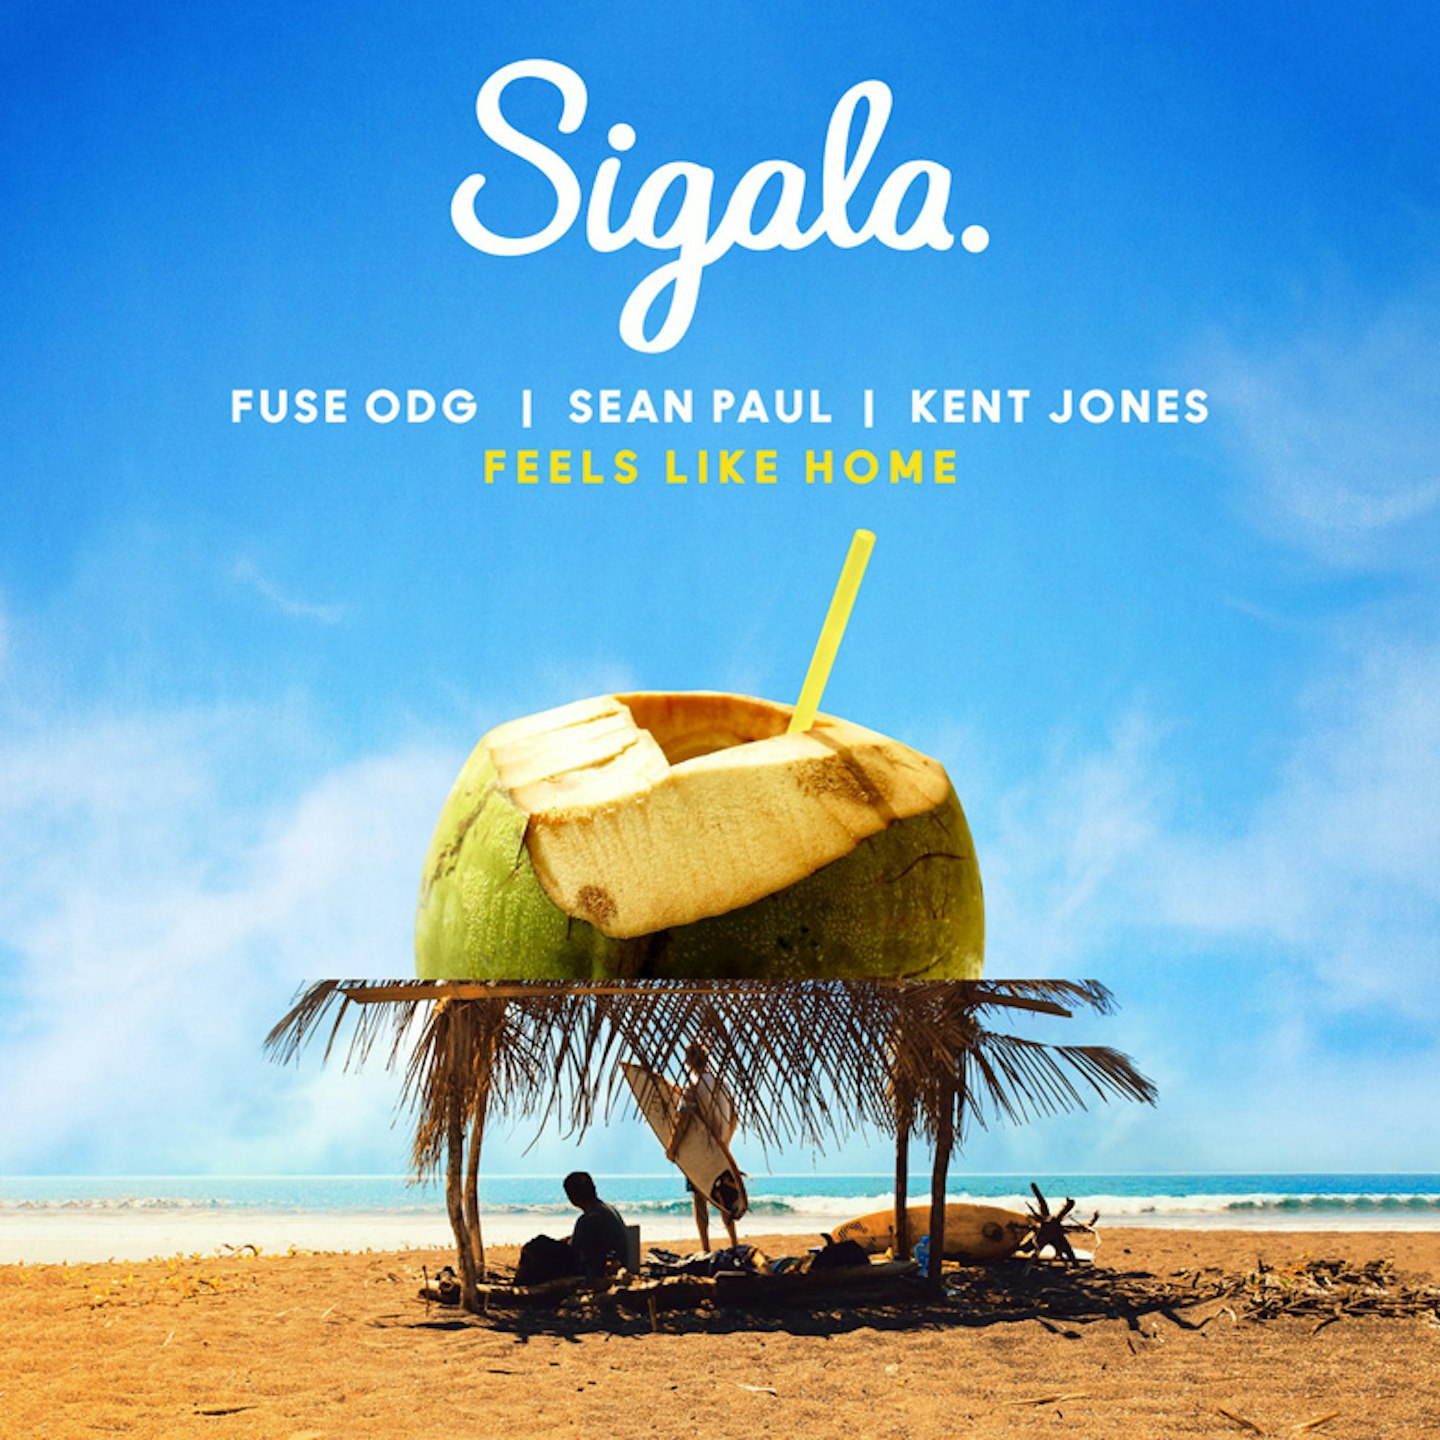 Sigala - 'Feels Like Home', featuring Fuse ODG, Sean Paul and Kent Jones